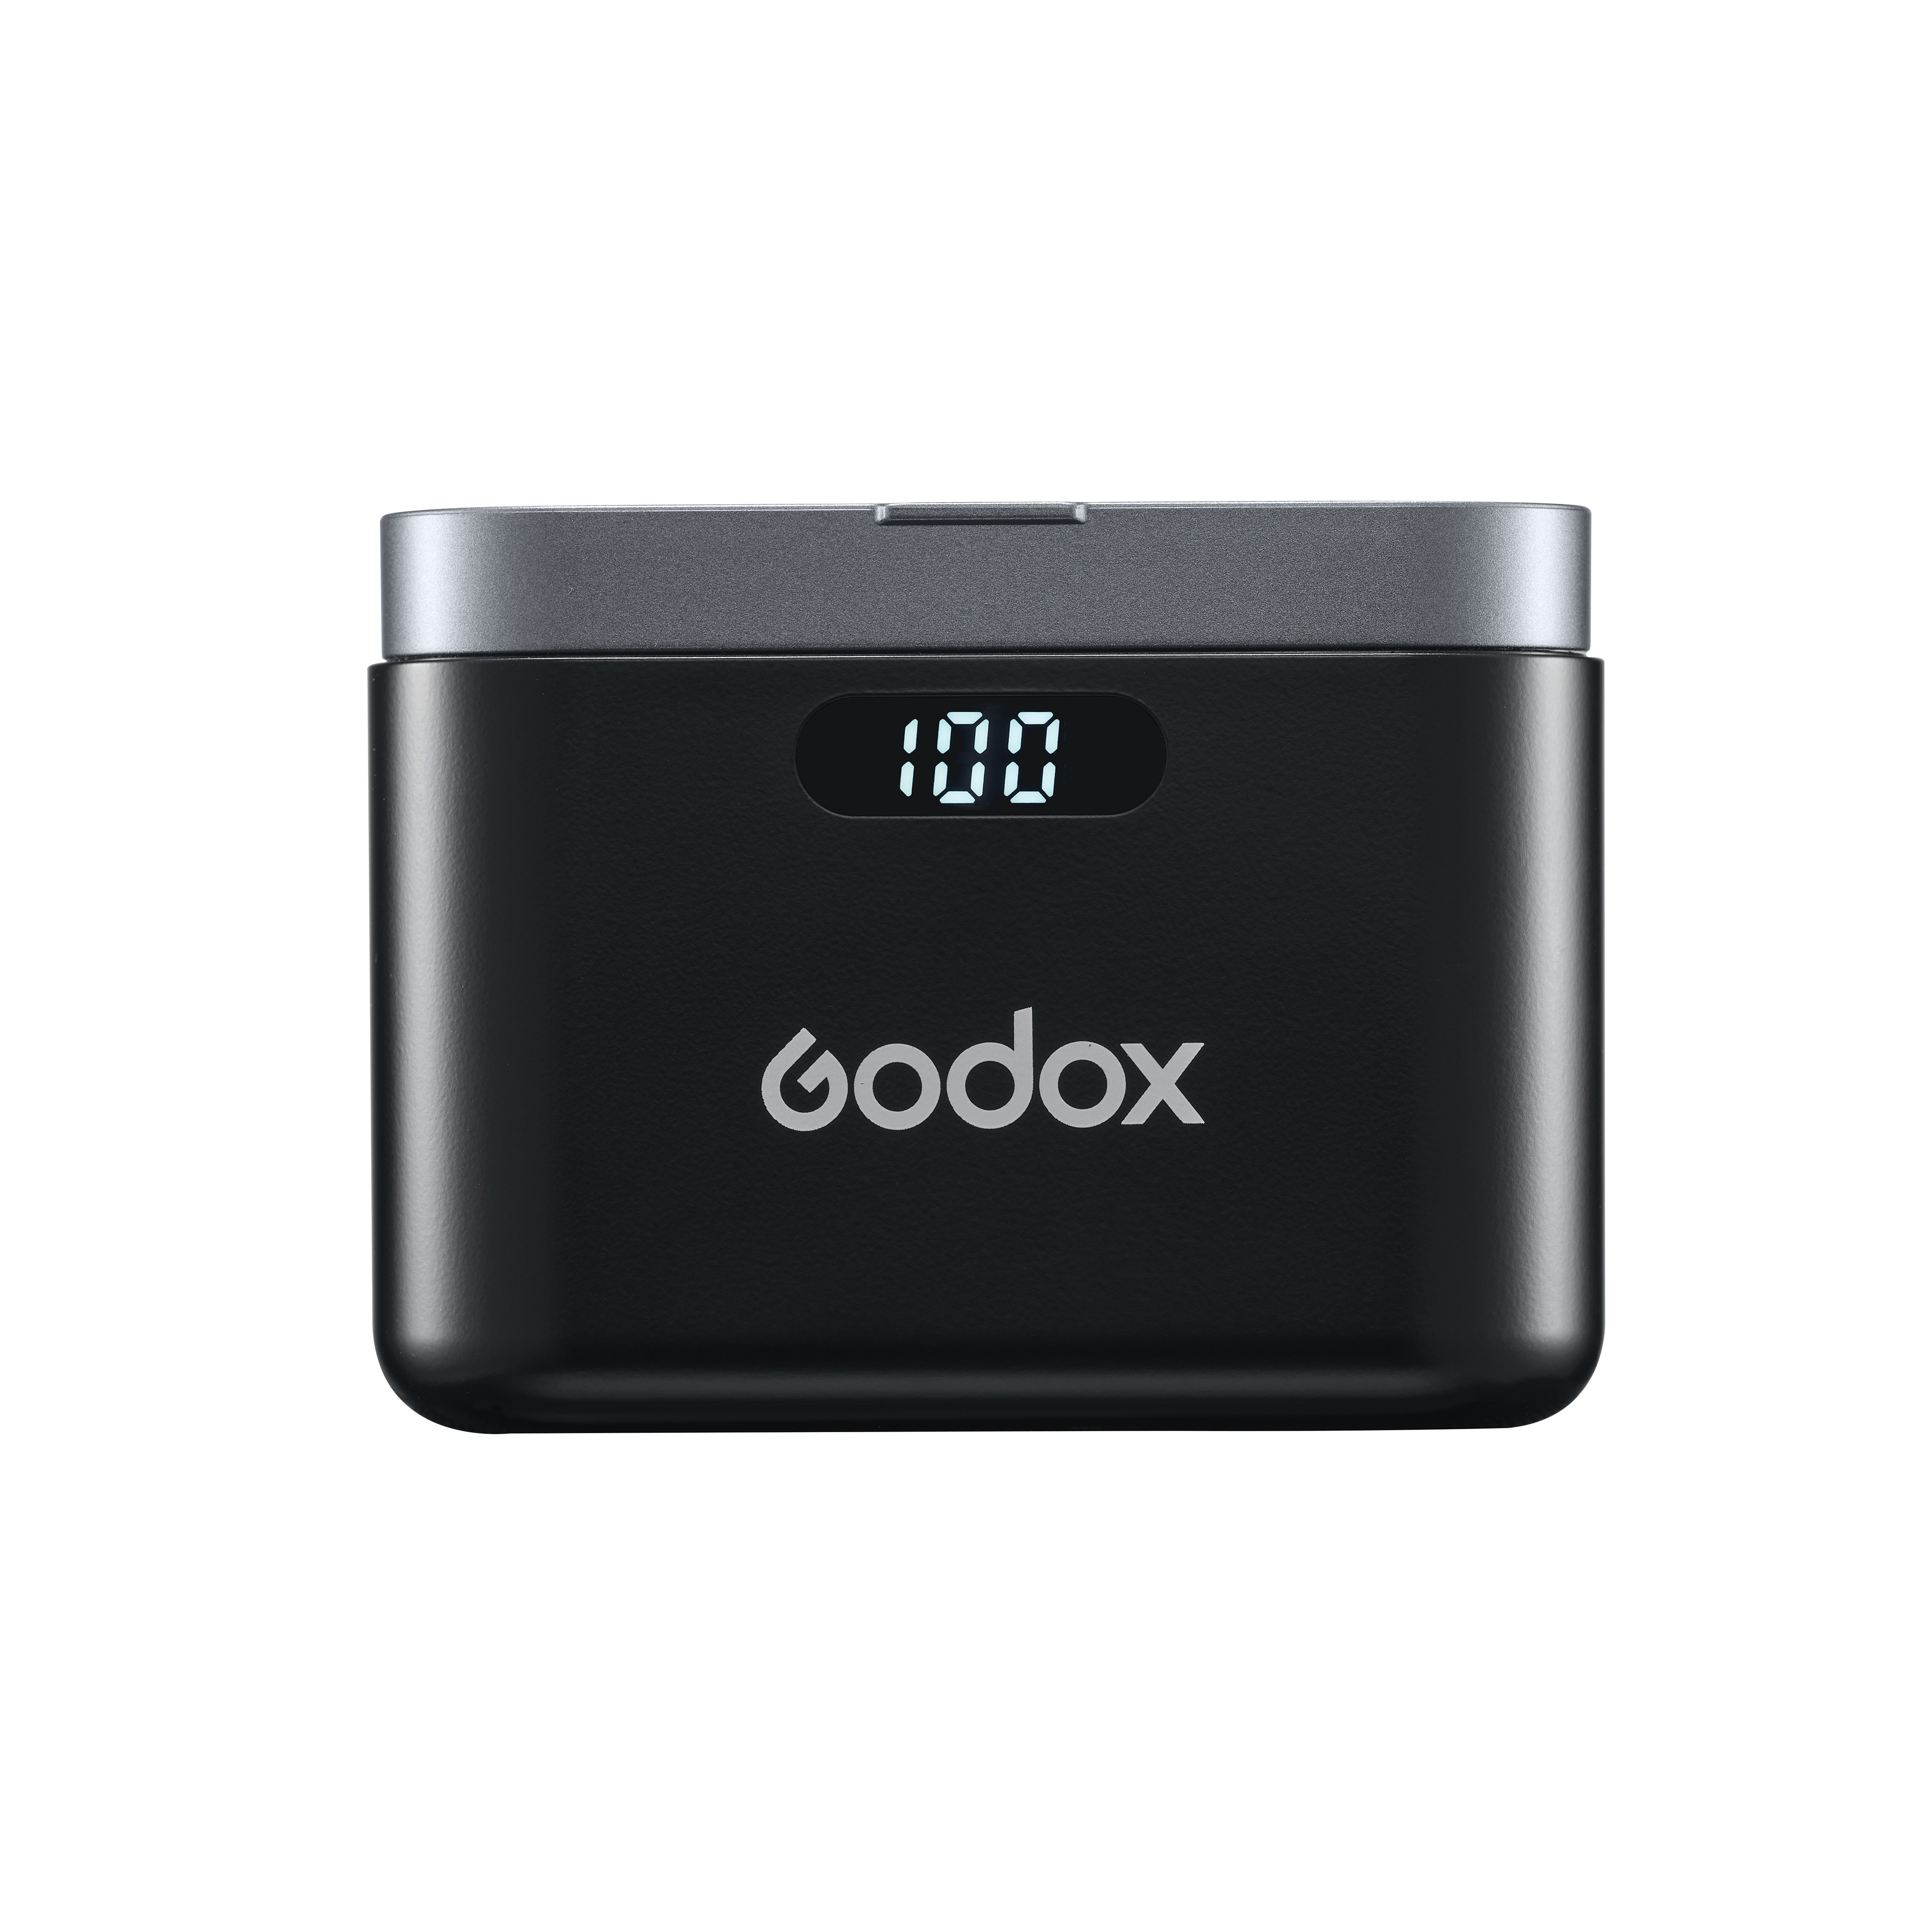   Godox WEC Kit2    Ultra-mart